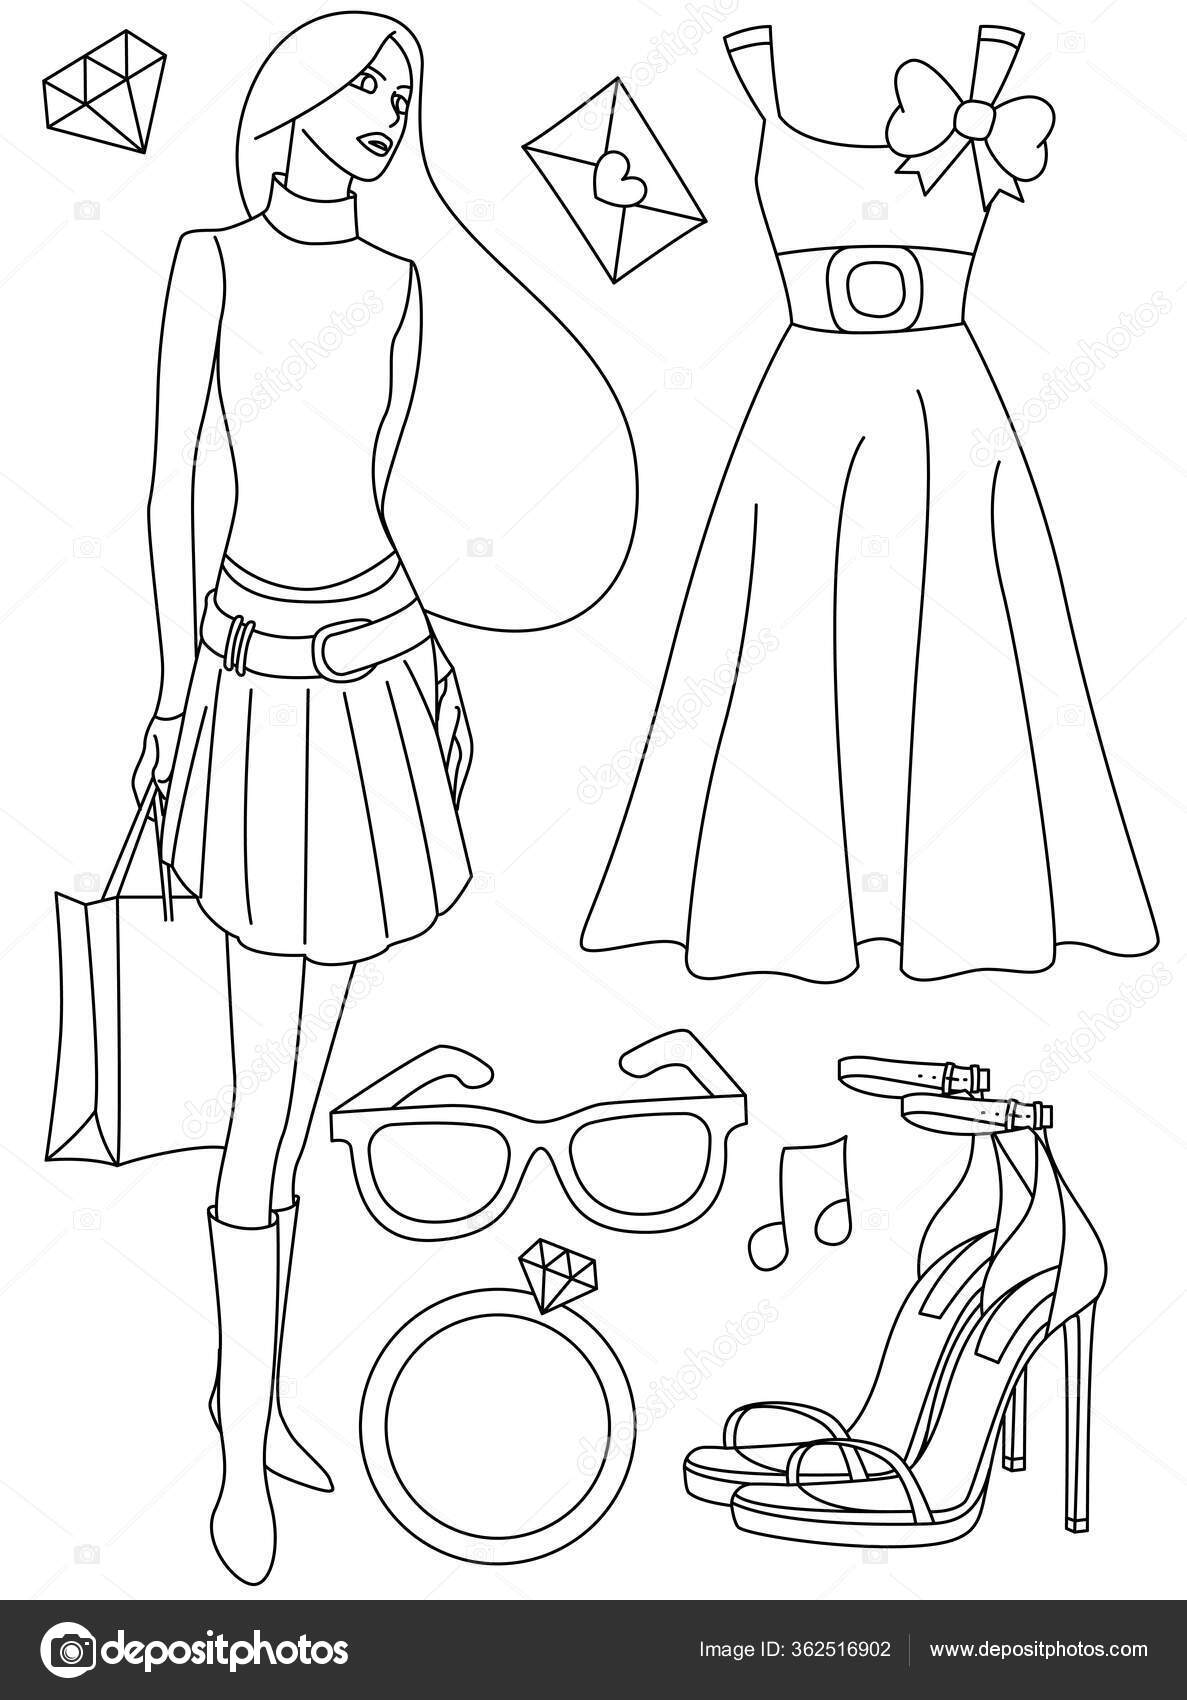 https://st3.depositphotos.com/33984282/36251/v/1600/depositphotos_362516902-stock-illustration-doodle-outline-vector-illustration-fashion.jpg